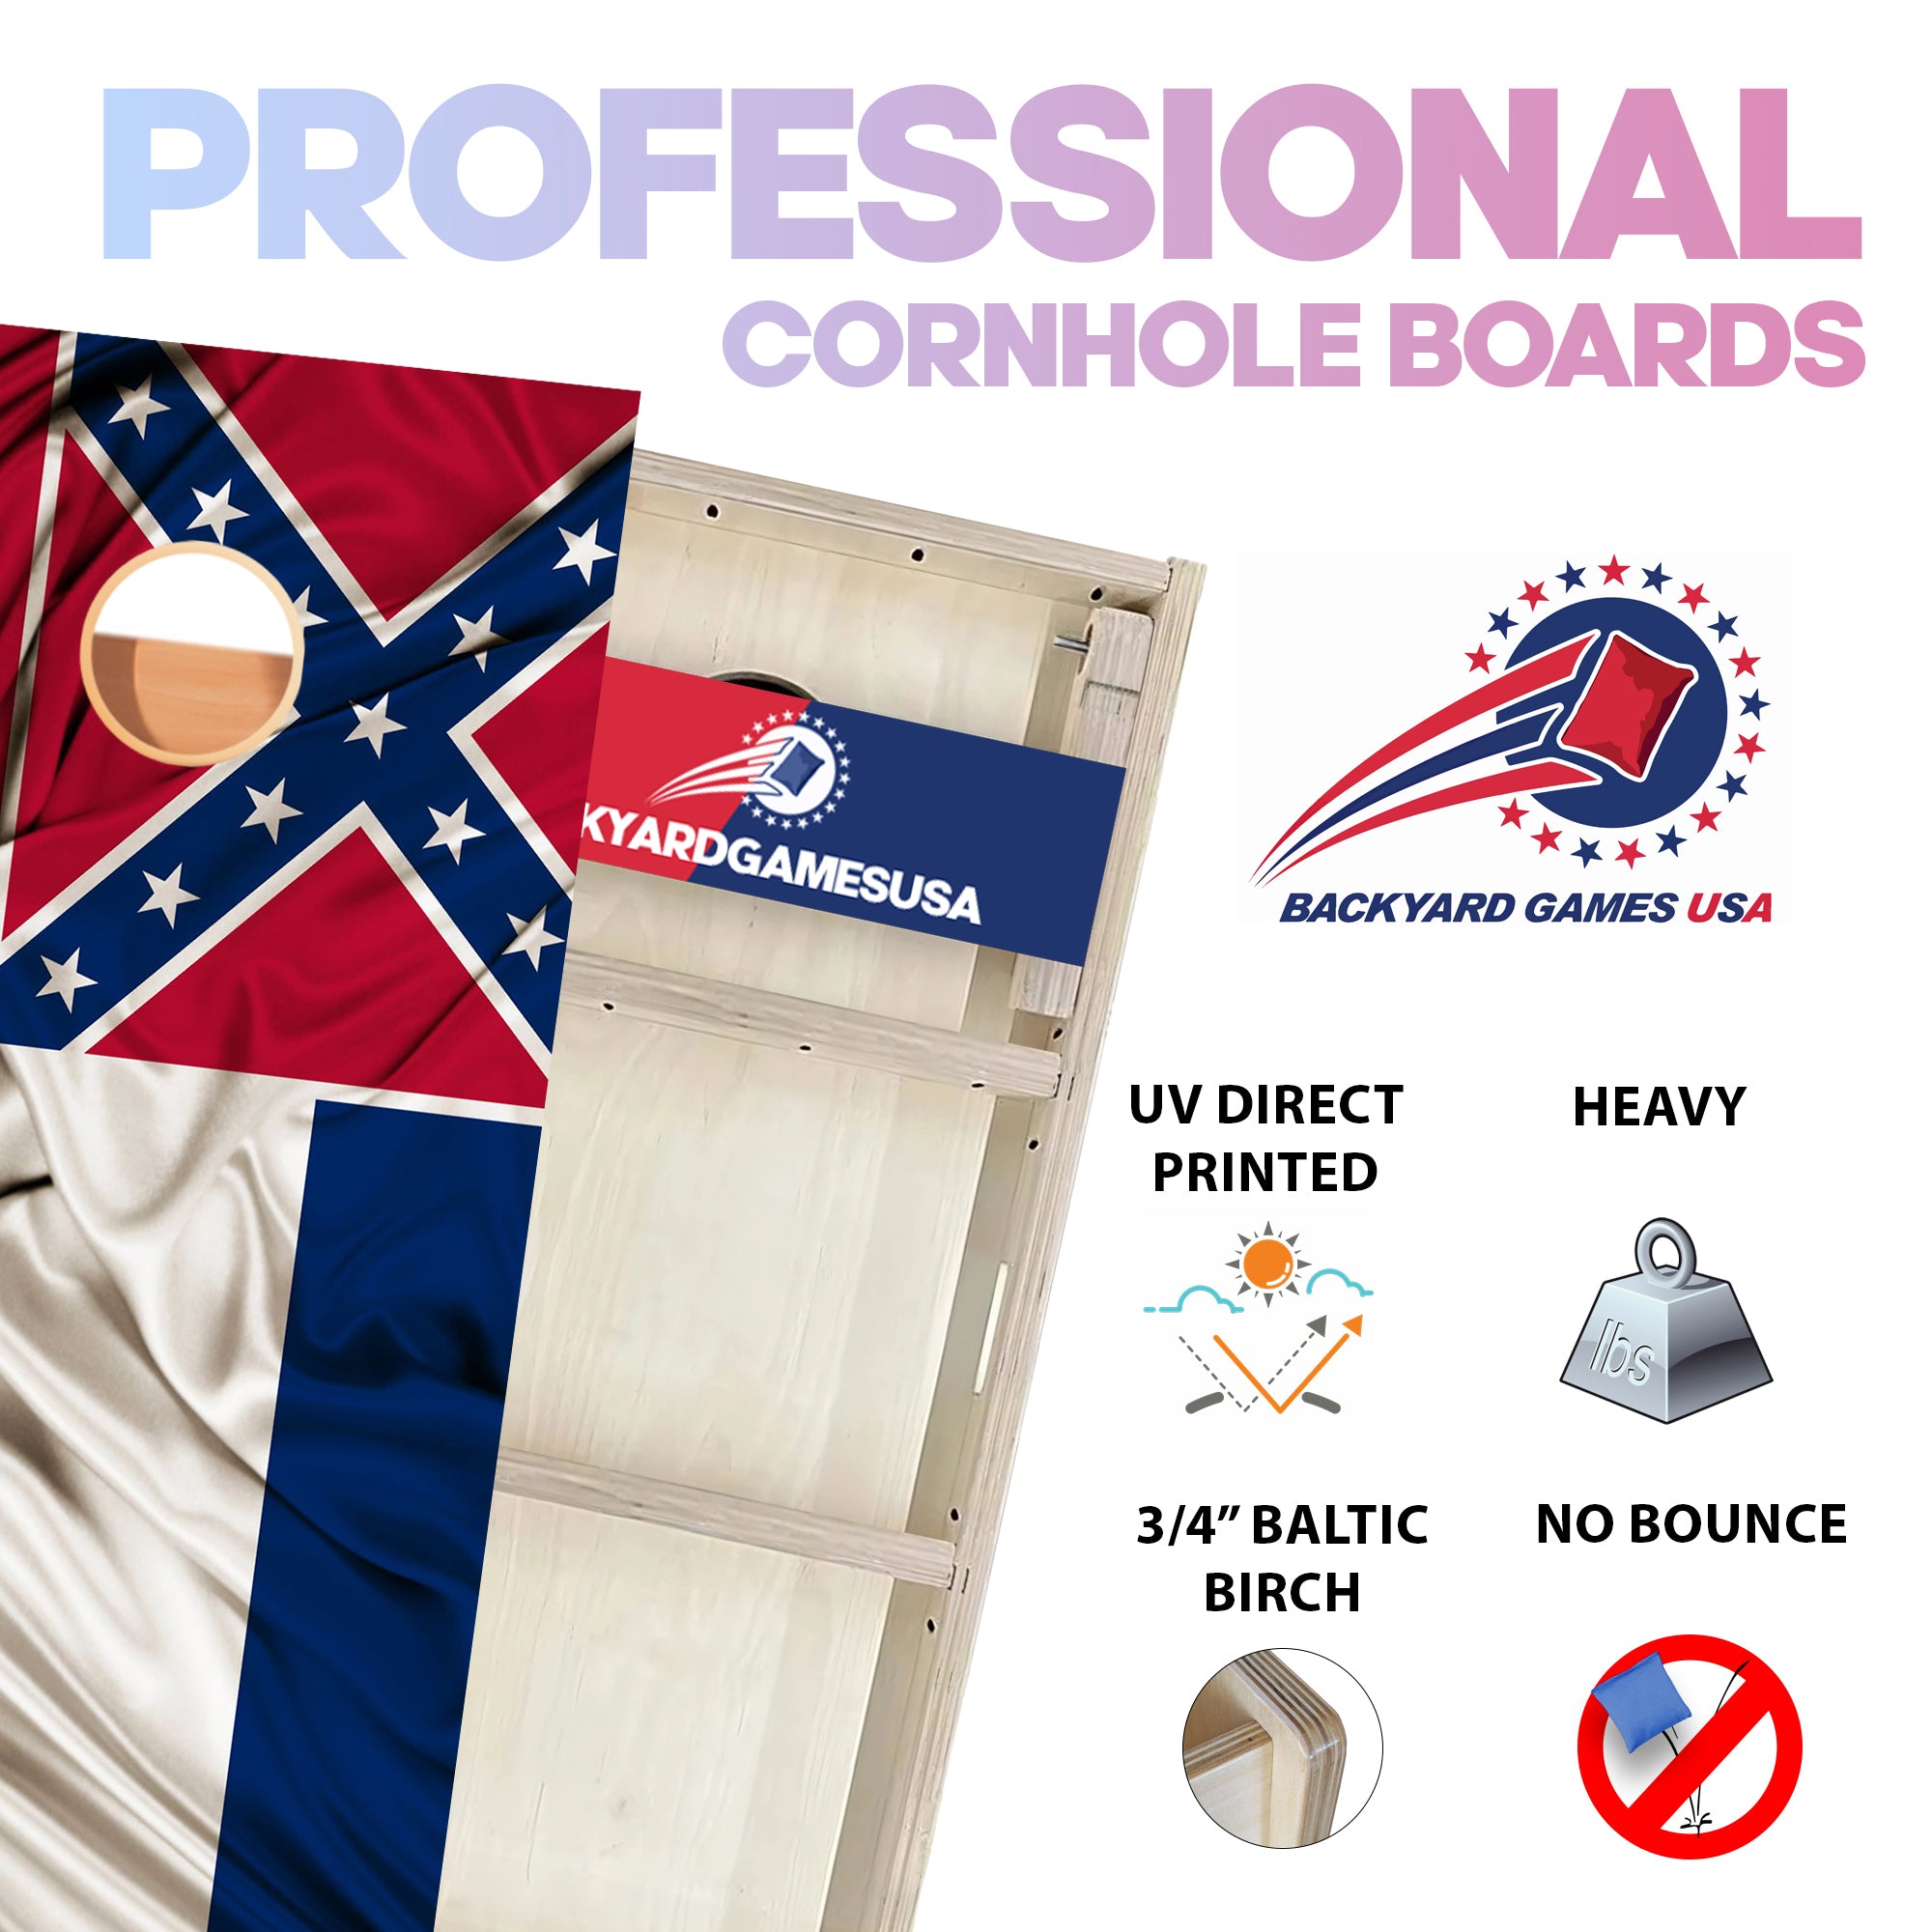 Mississippi Professional Cornhole Boards